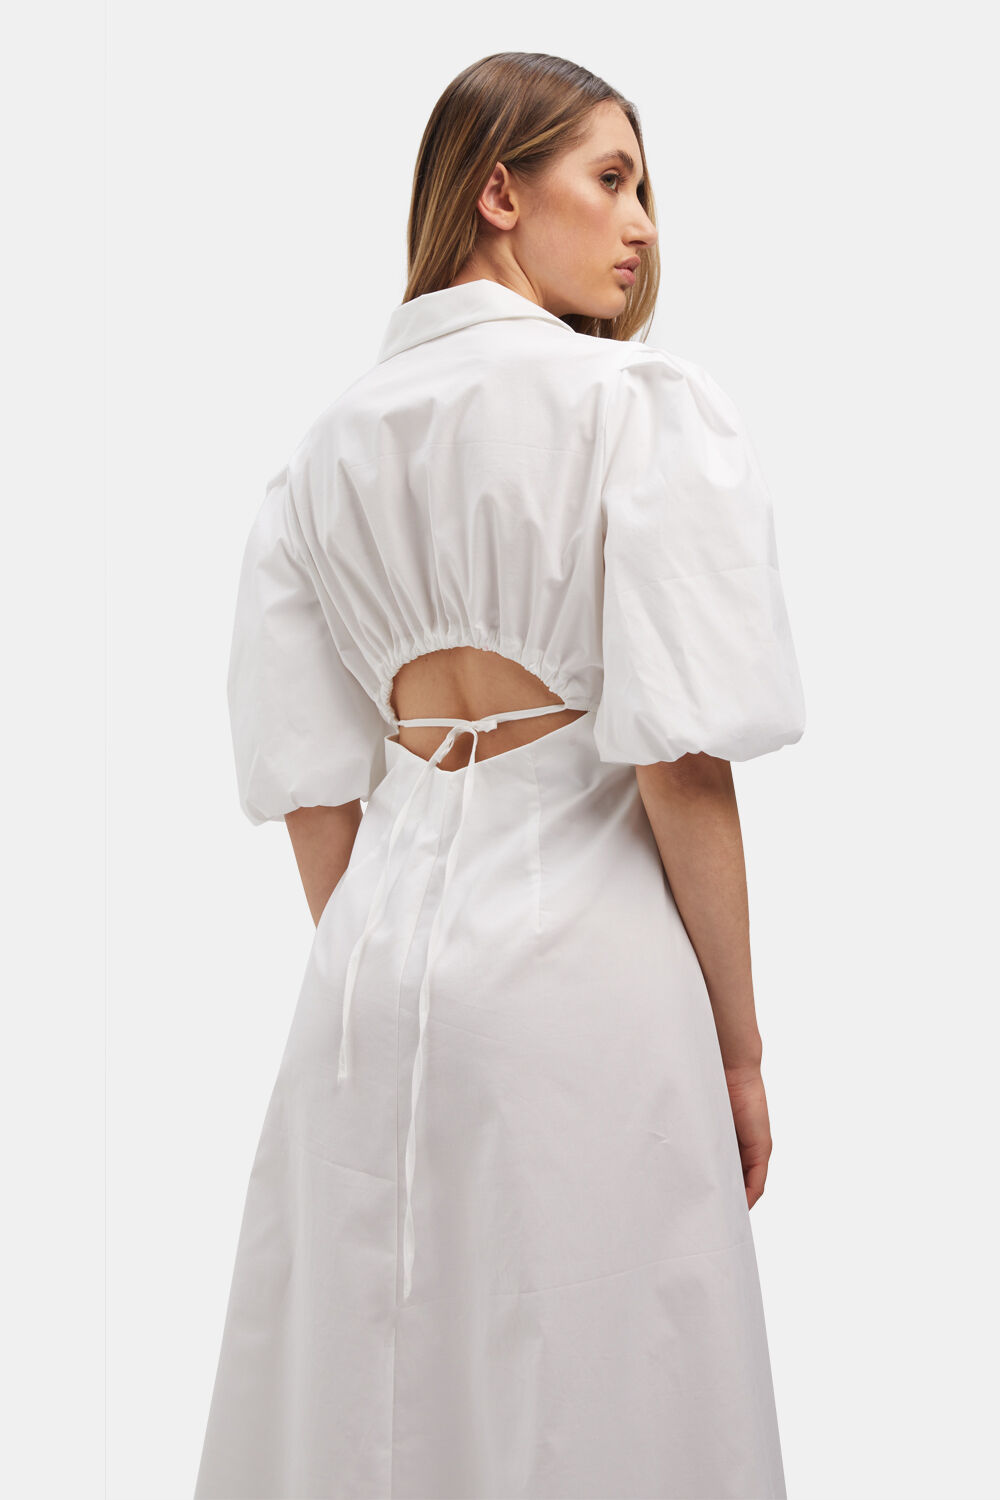 HADES MIDI SHIRT DRESS in colour BRIGHT WHITE